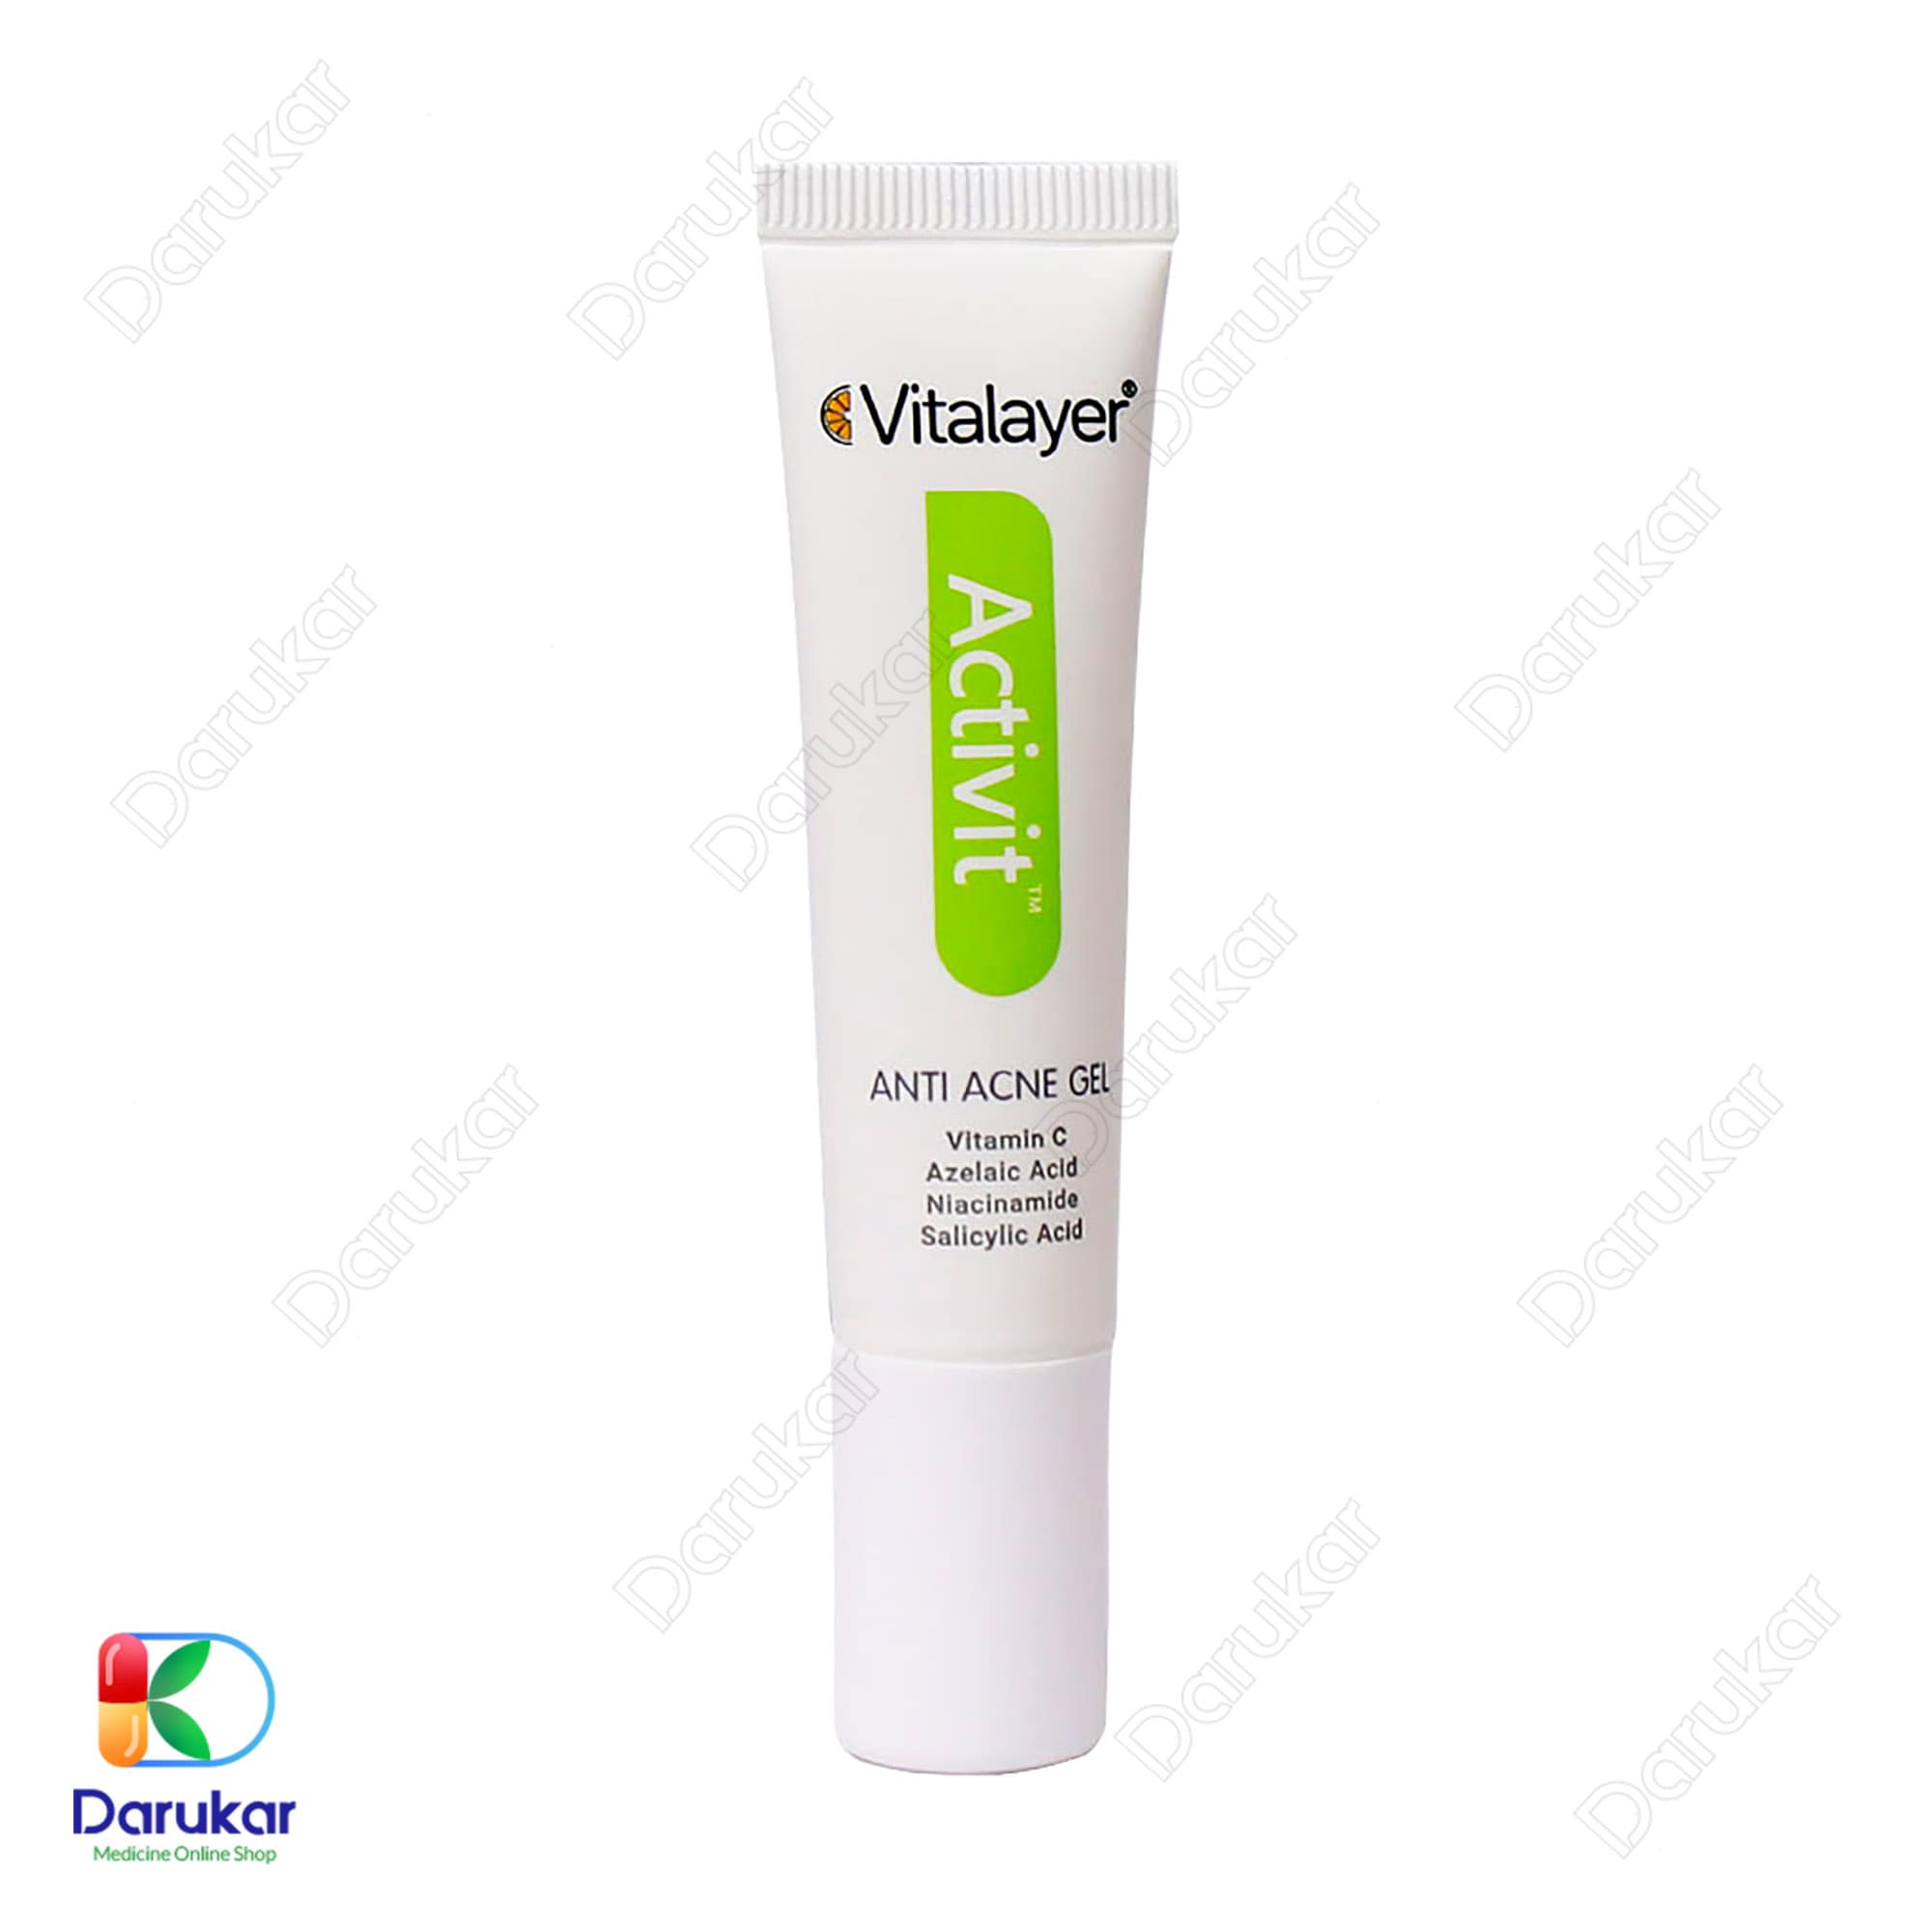 Vitalayer Activit Anti Acne Gel 15 ml 3